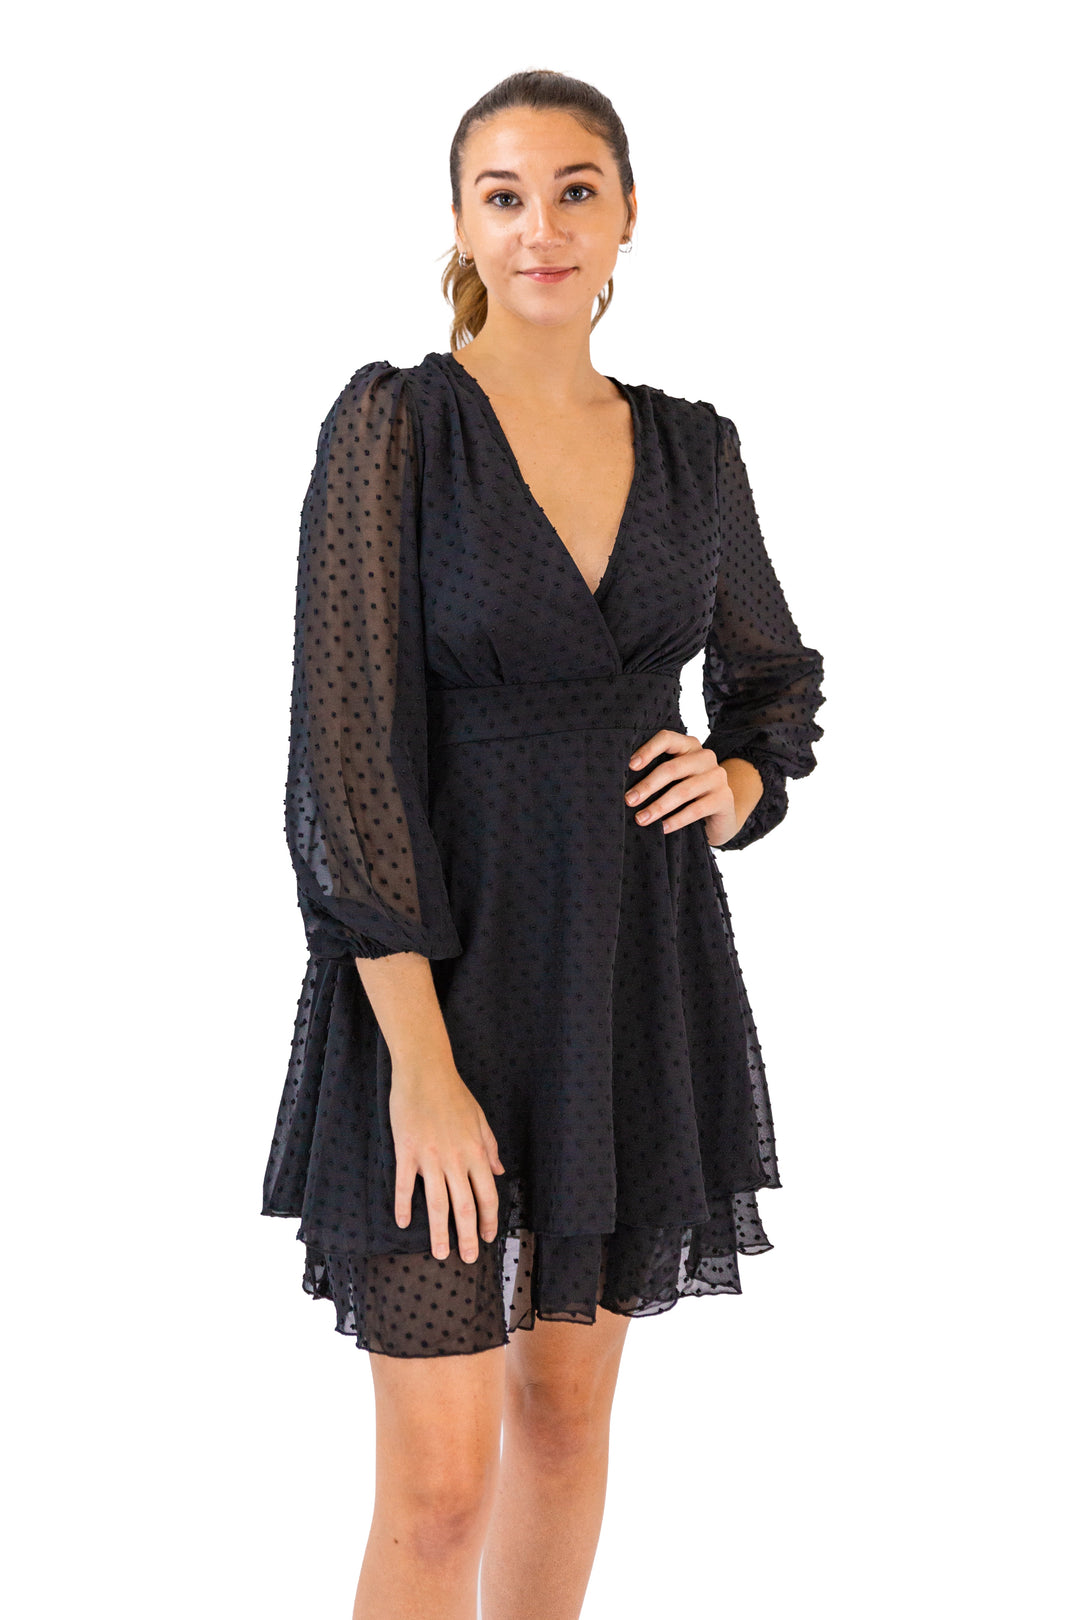 Fabonics Midnight Charm Black Dot-Mesh Skater Dress with Elegant Long Sleeves and Flared Design for Stylish Evening Wear